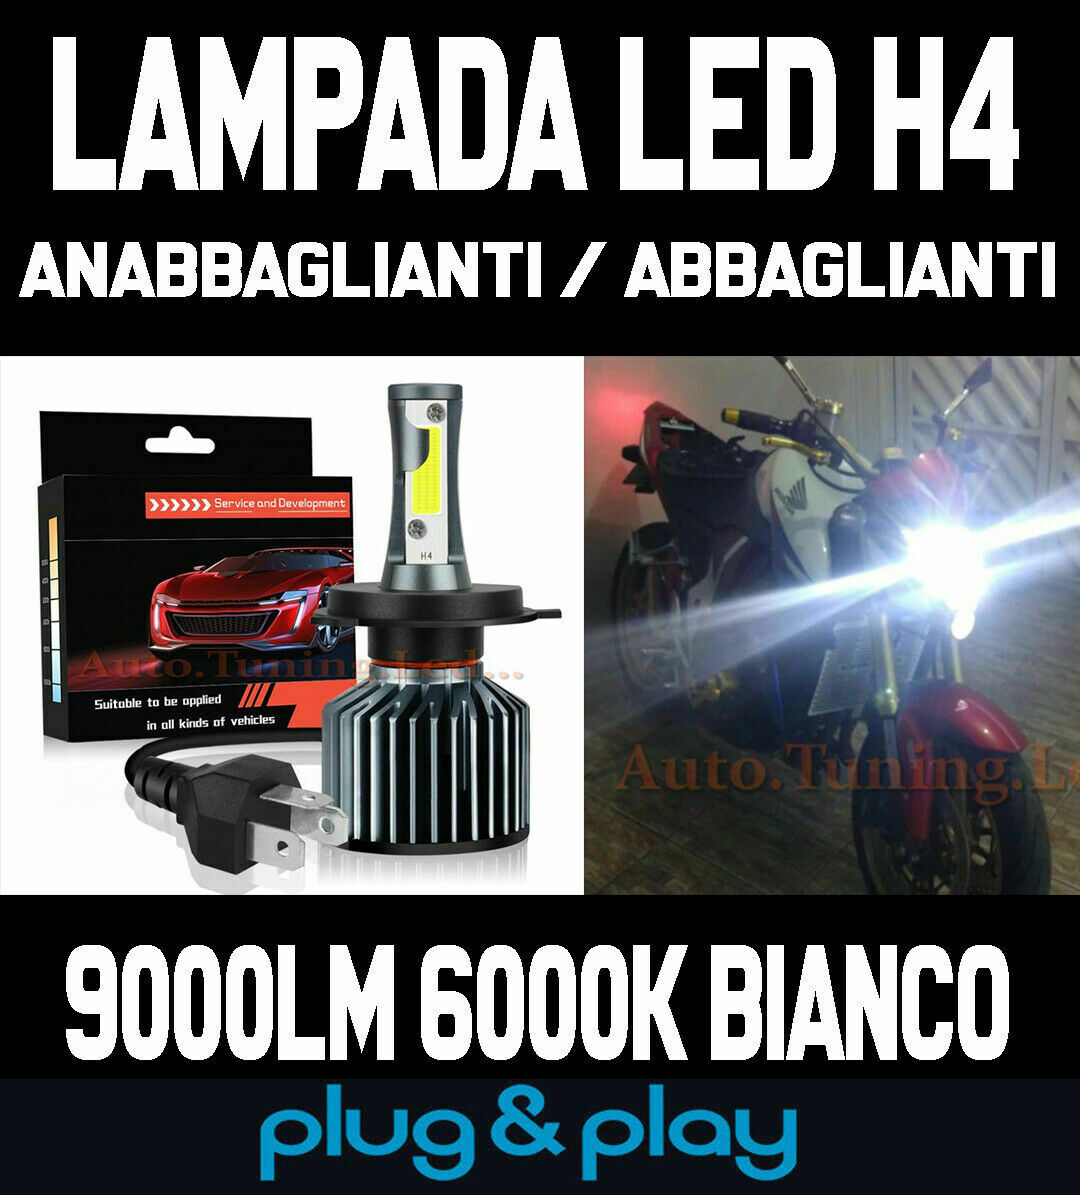 YAMAHA XVS LAMPADA LED H4 6000K CANBUS 9000LM ANABBAGLIANTI ABBAGLIANTI